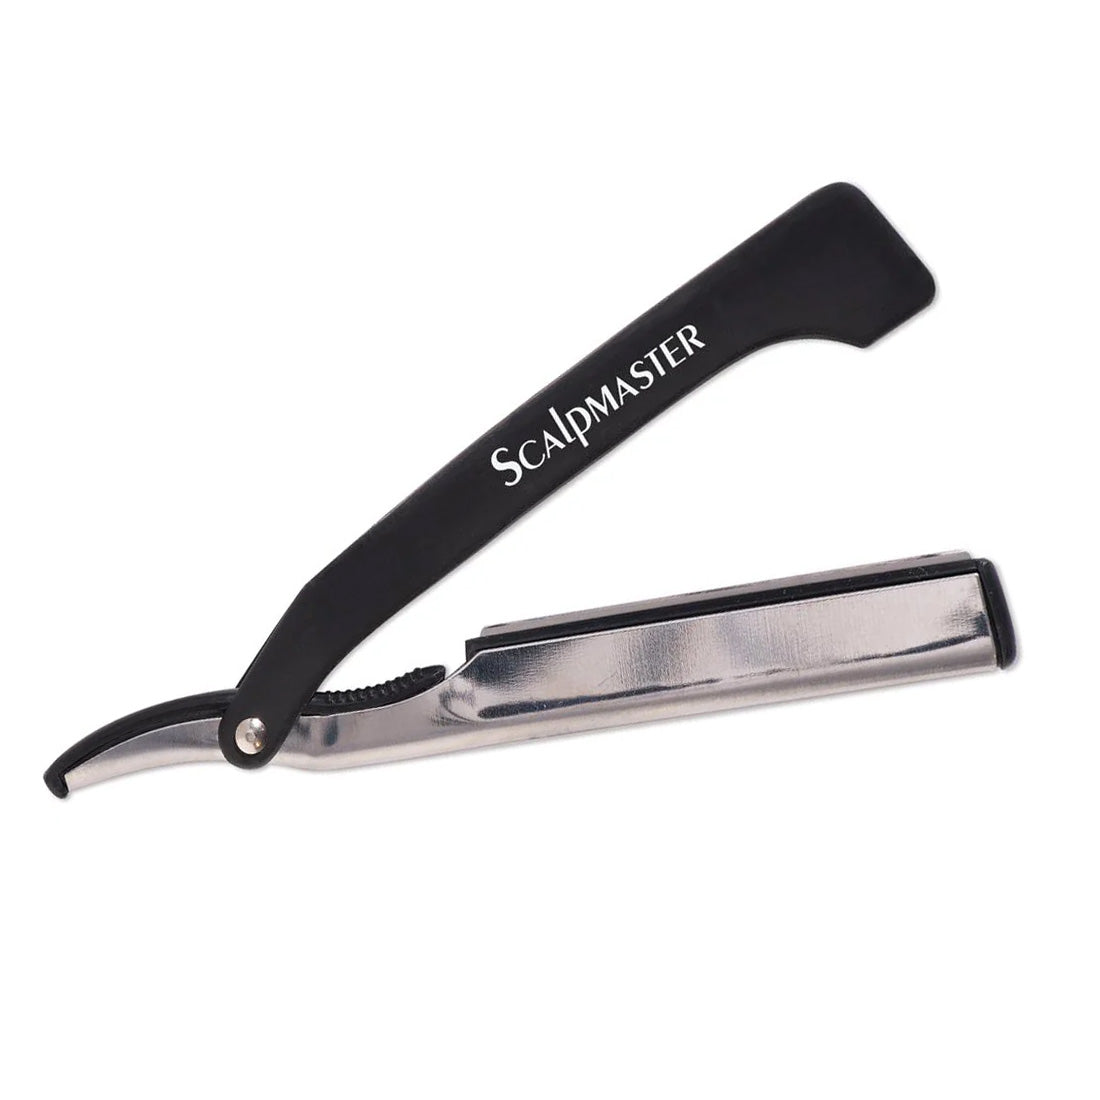 Scalpmaster Shaving Razor with Replaceable Blade